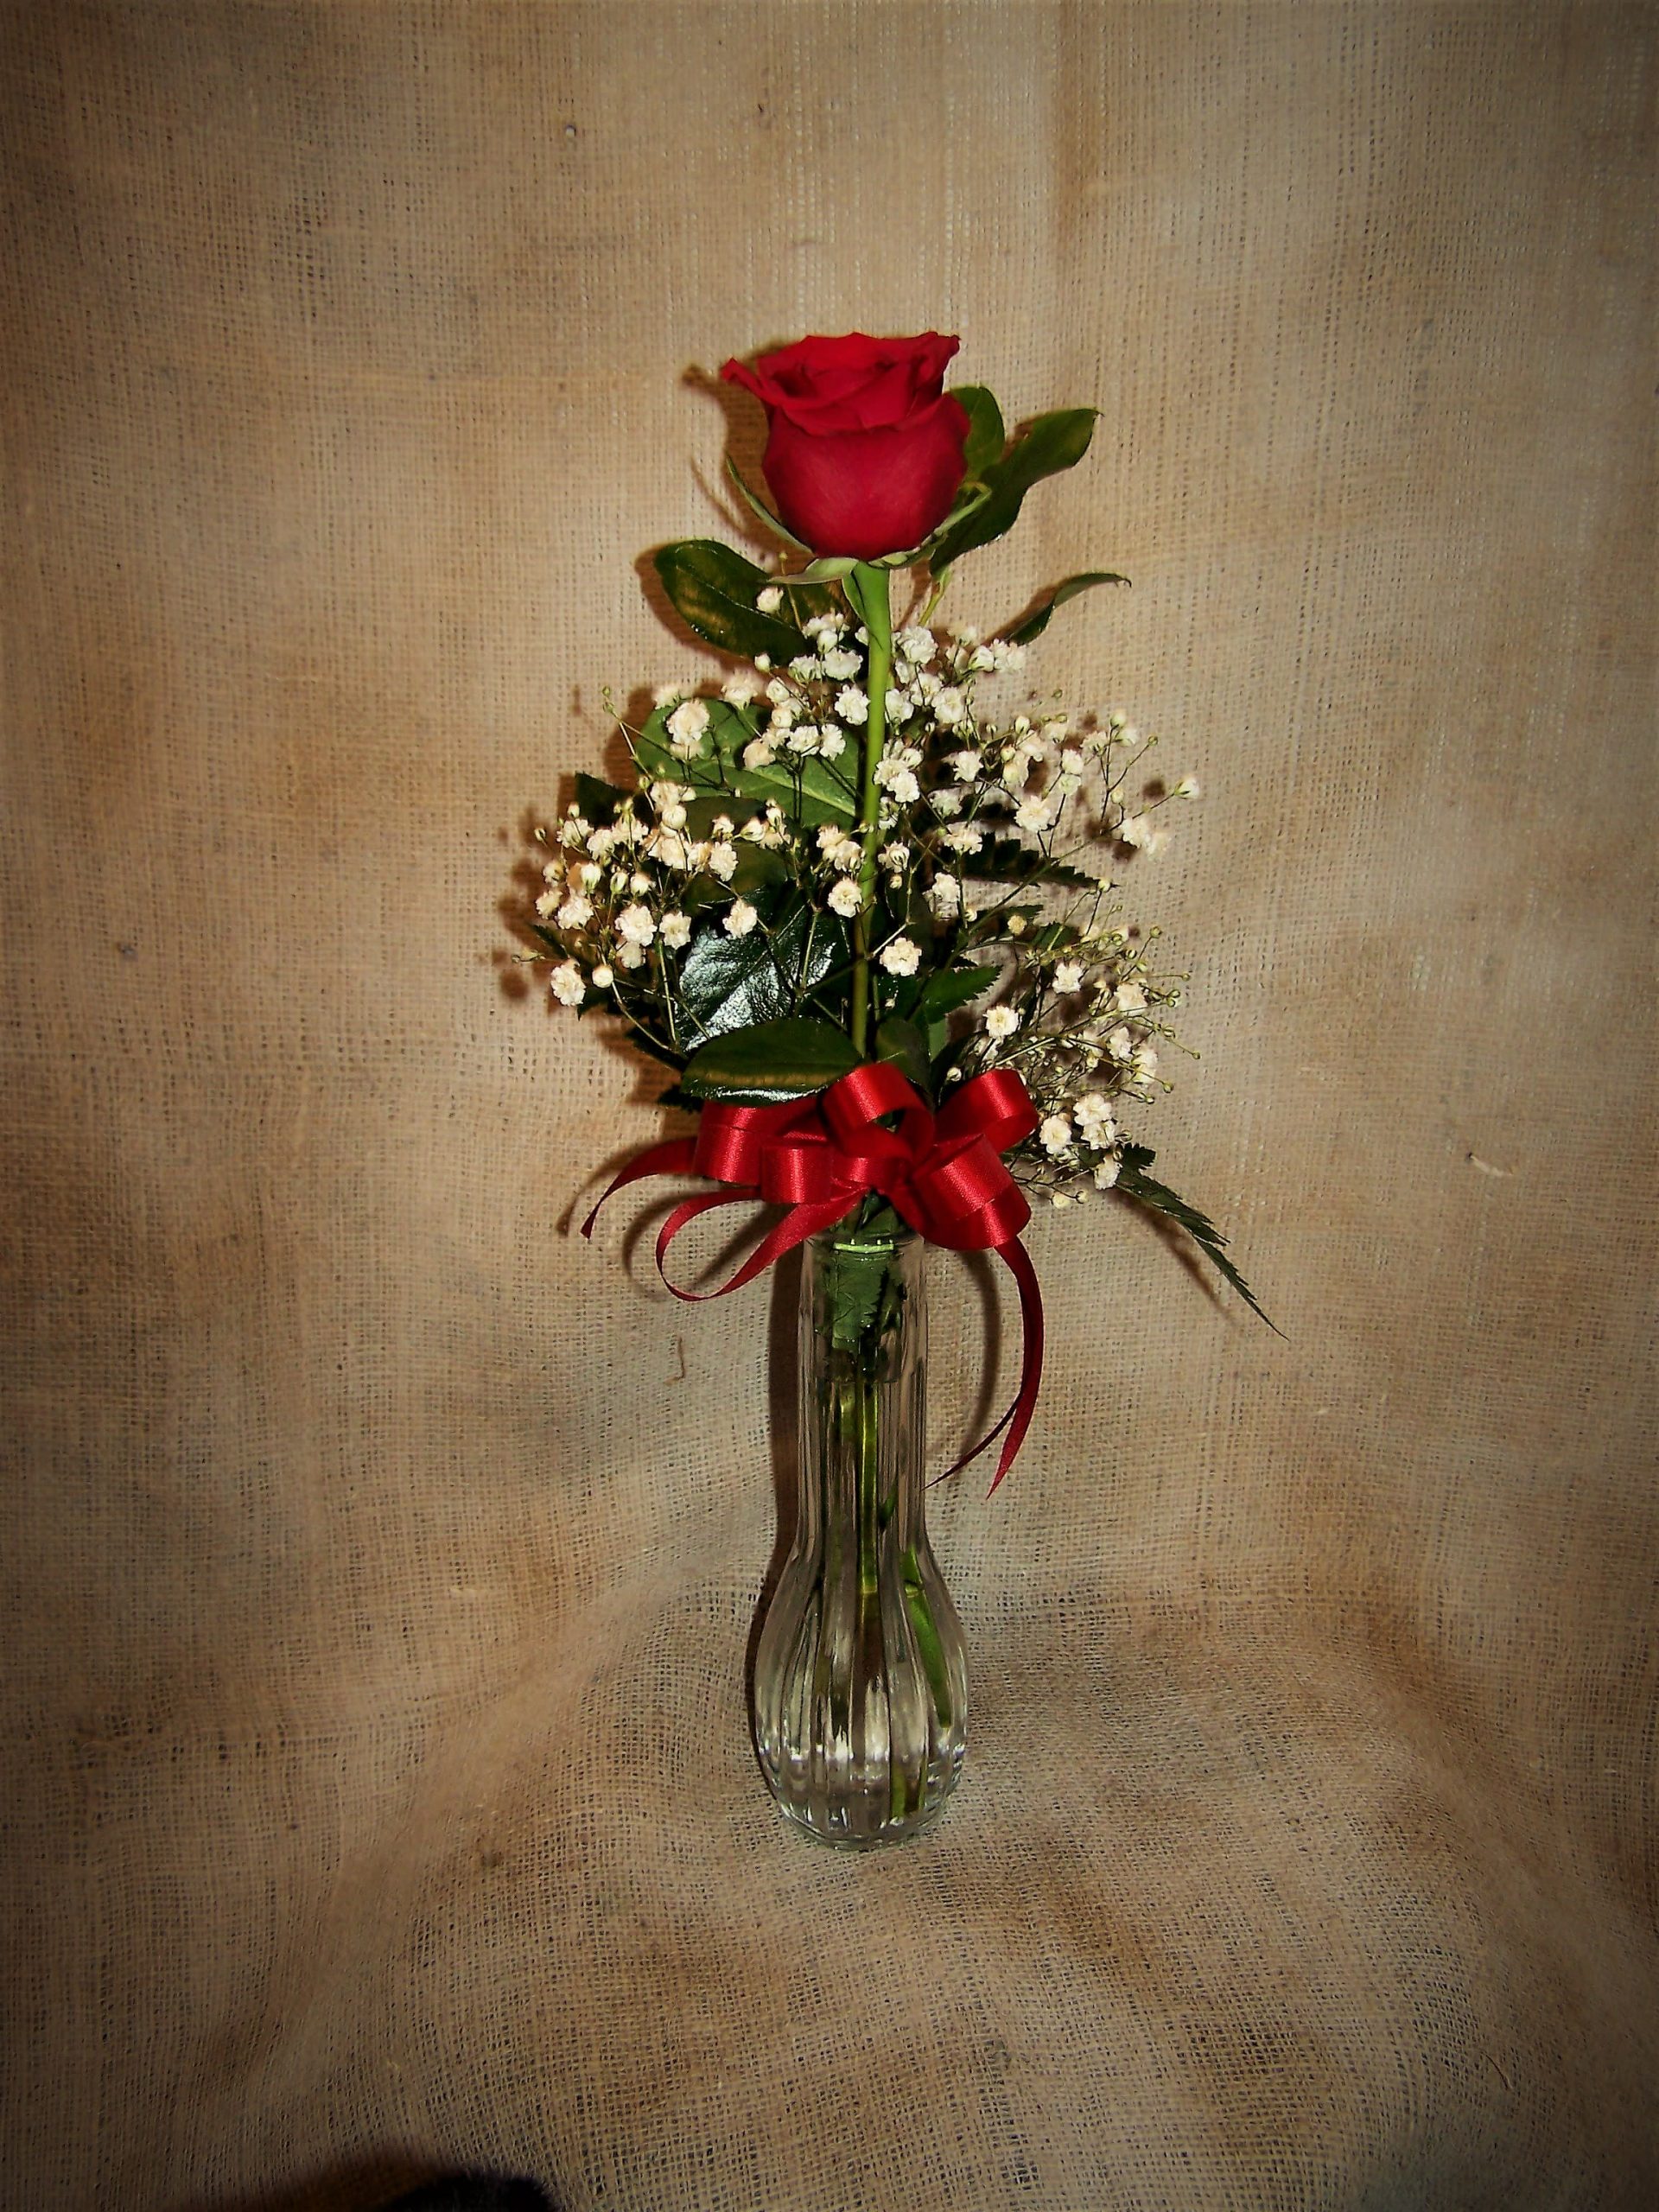 Rose Bud Vase Bellevue Florist within dimensions 2304 X 3072